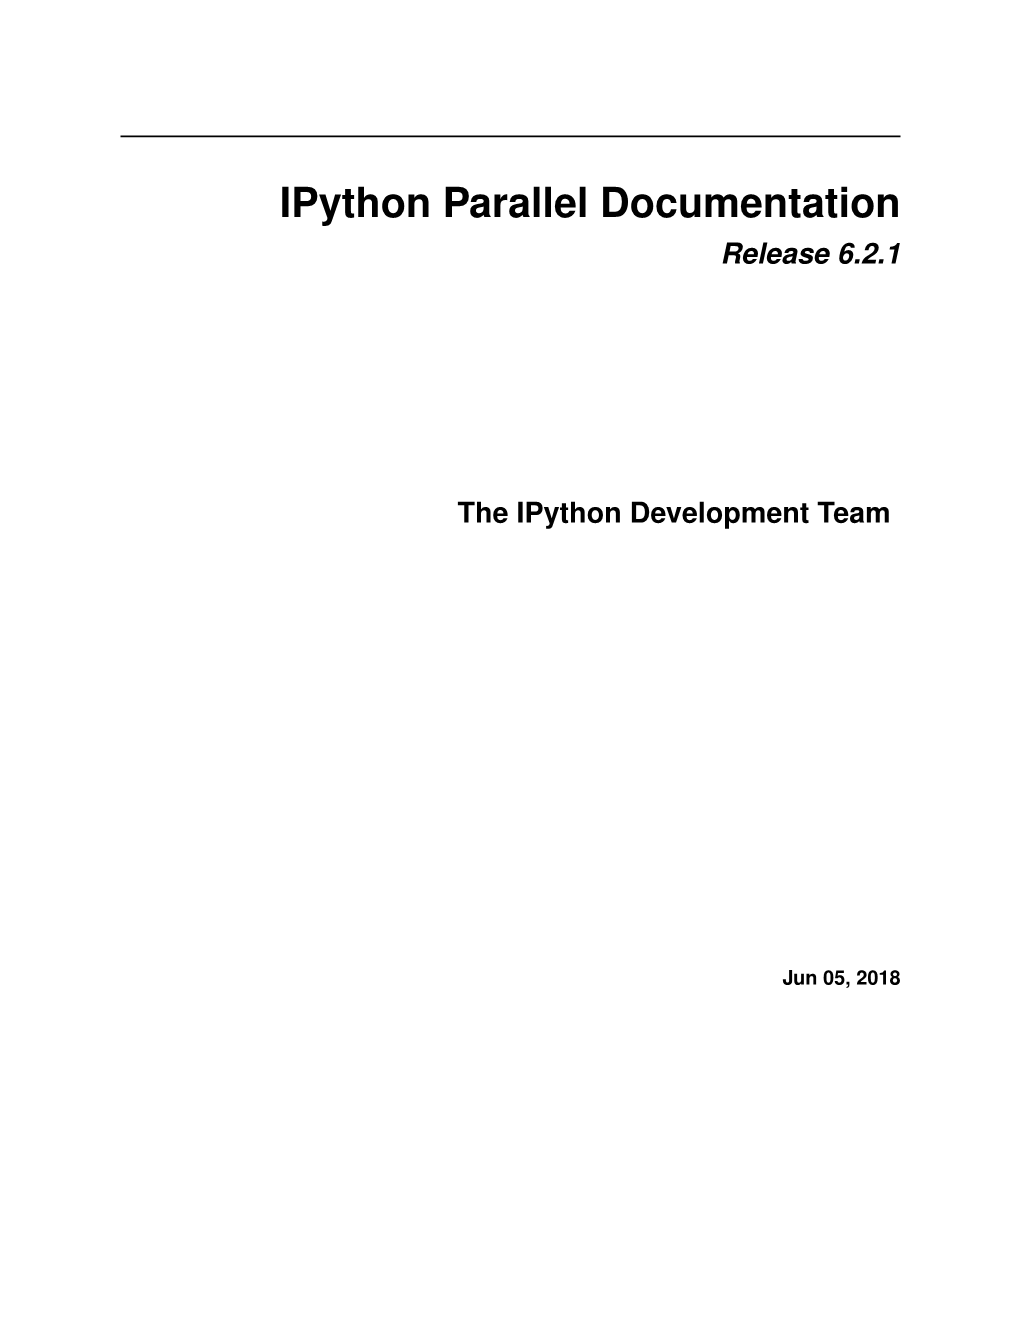 Ipython Parallel Documentation Release 6.2.1